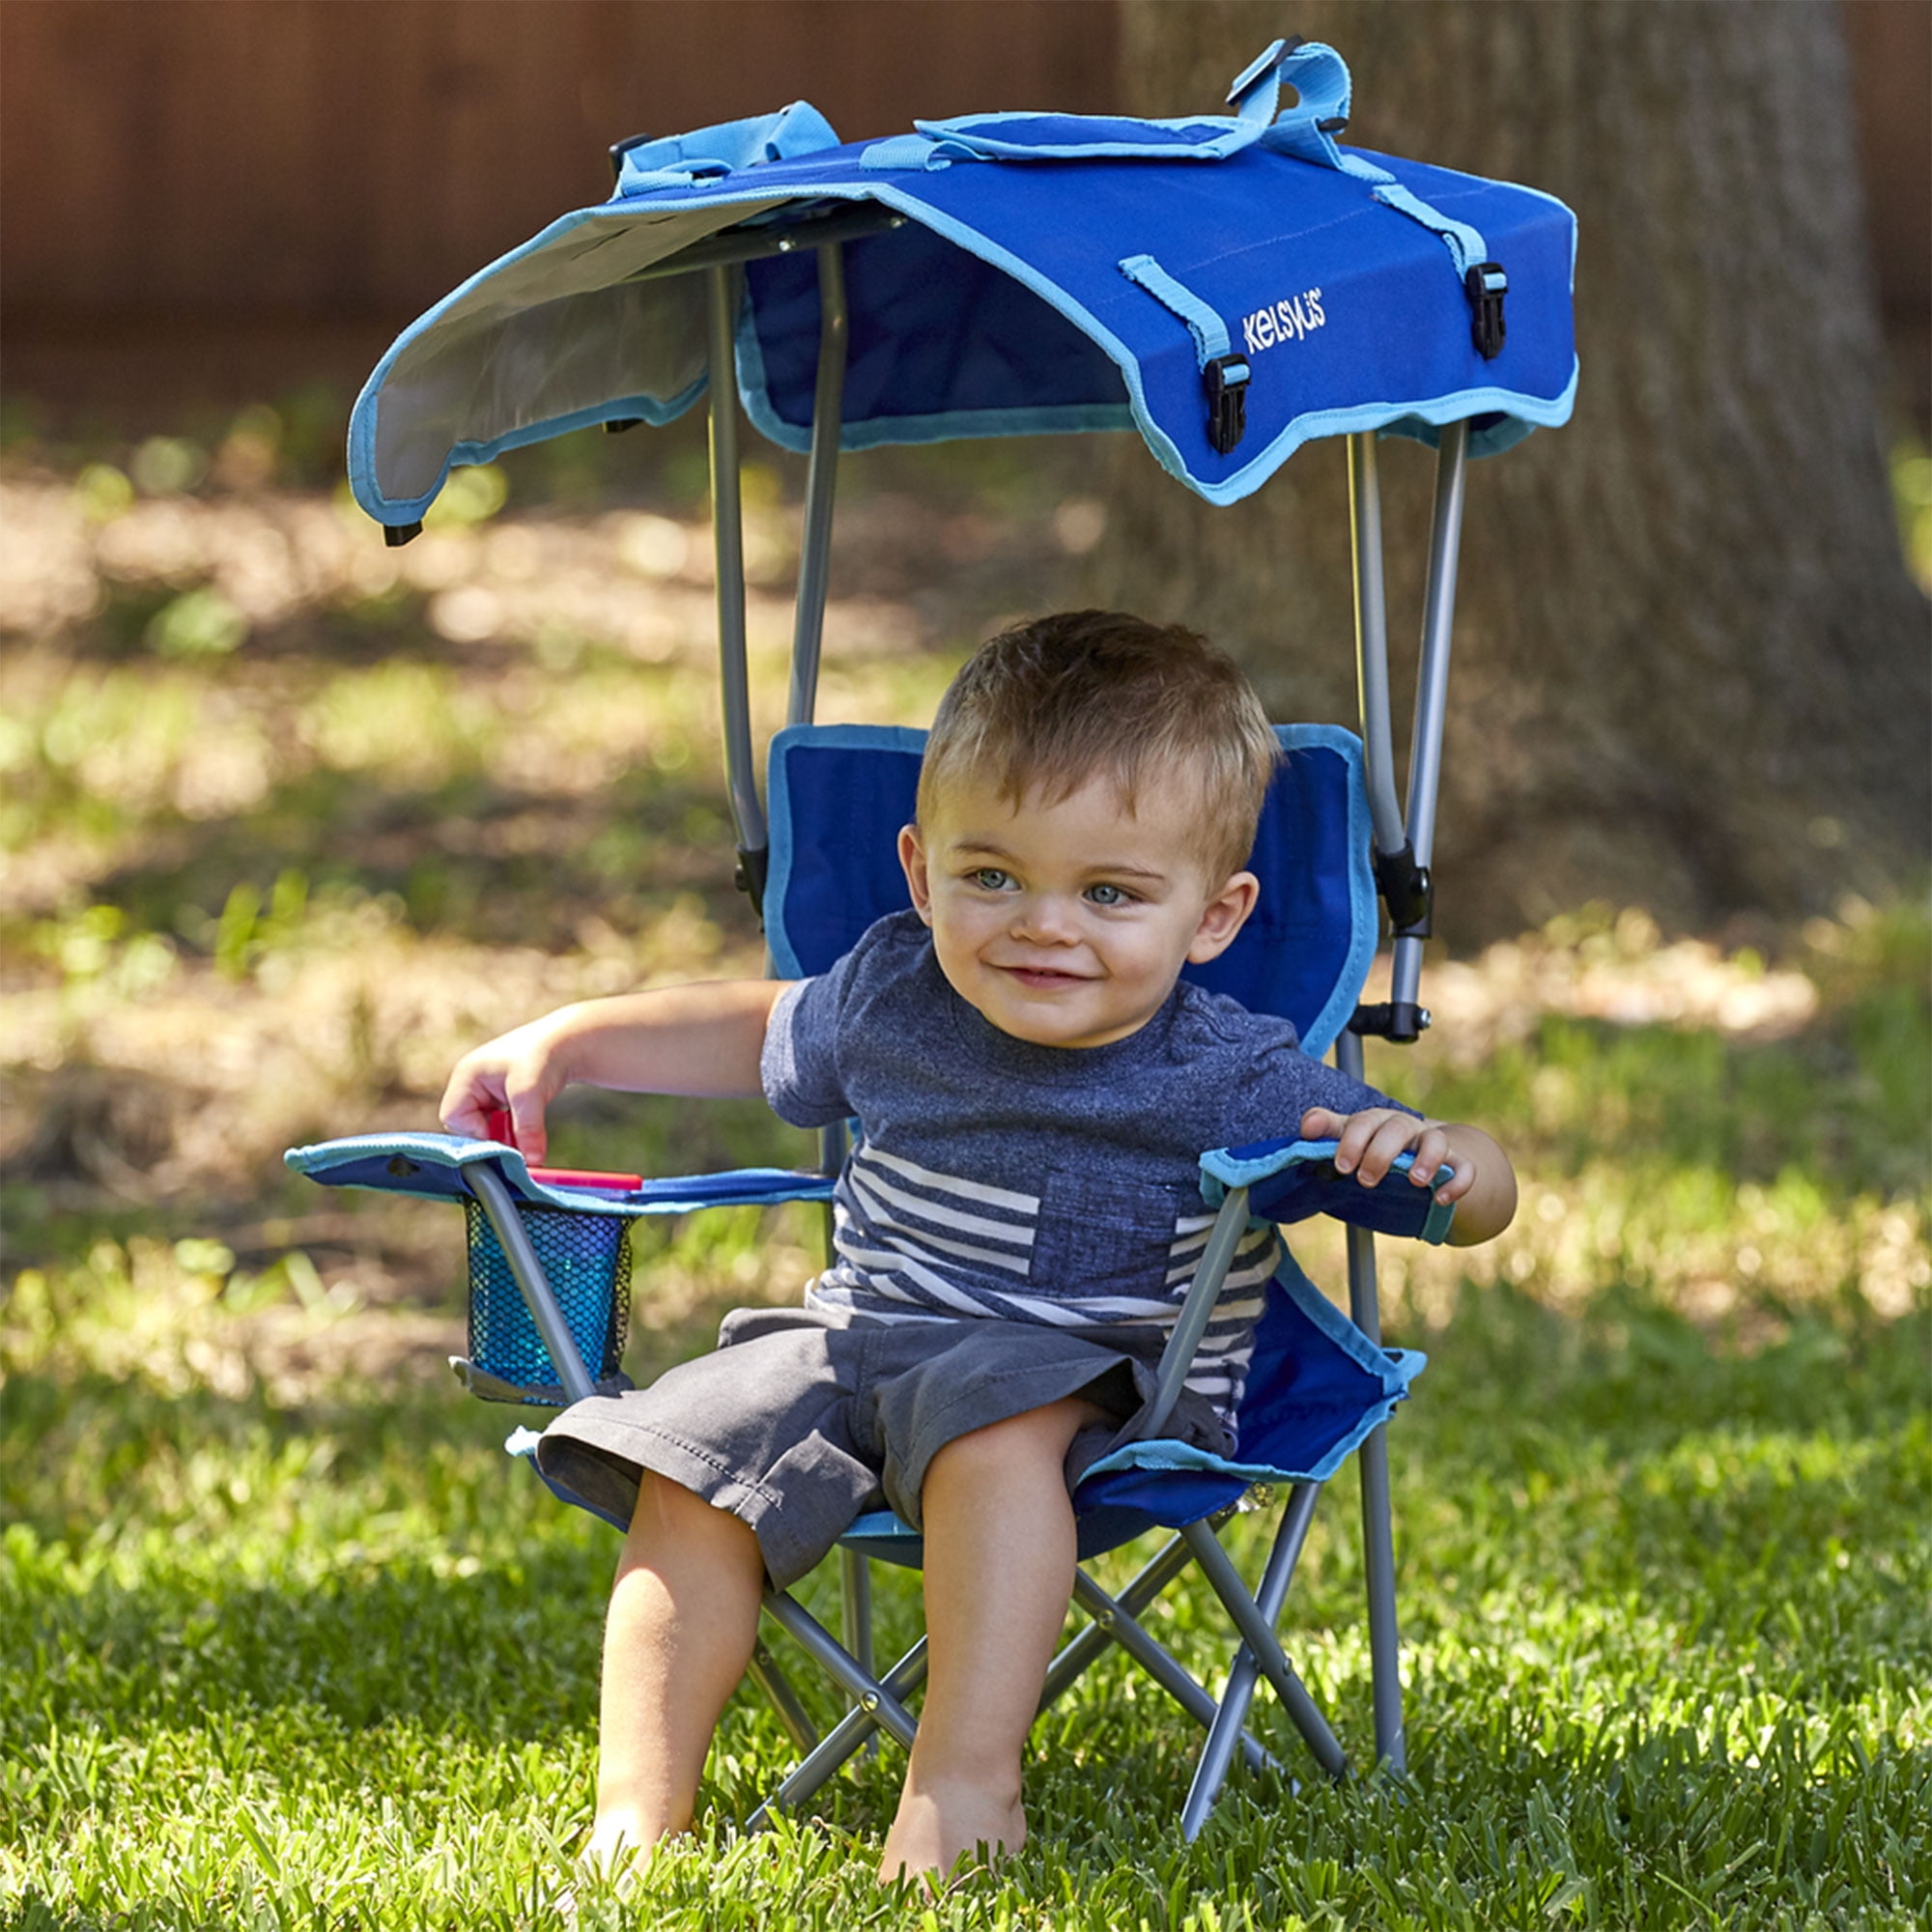 Kelsyus Kids Original Canopy Folding Backpack Lounge Chair Blue80316 